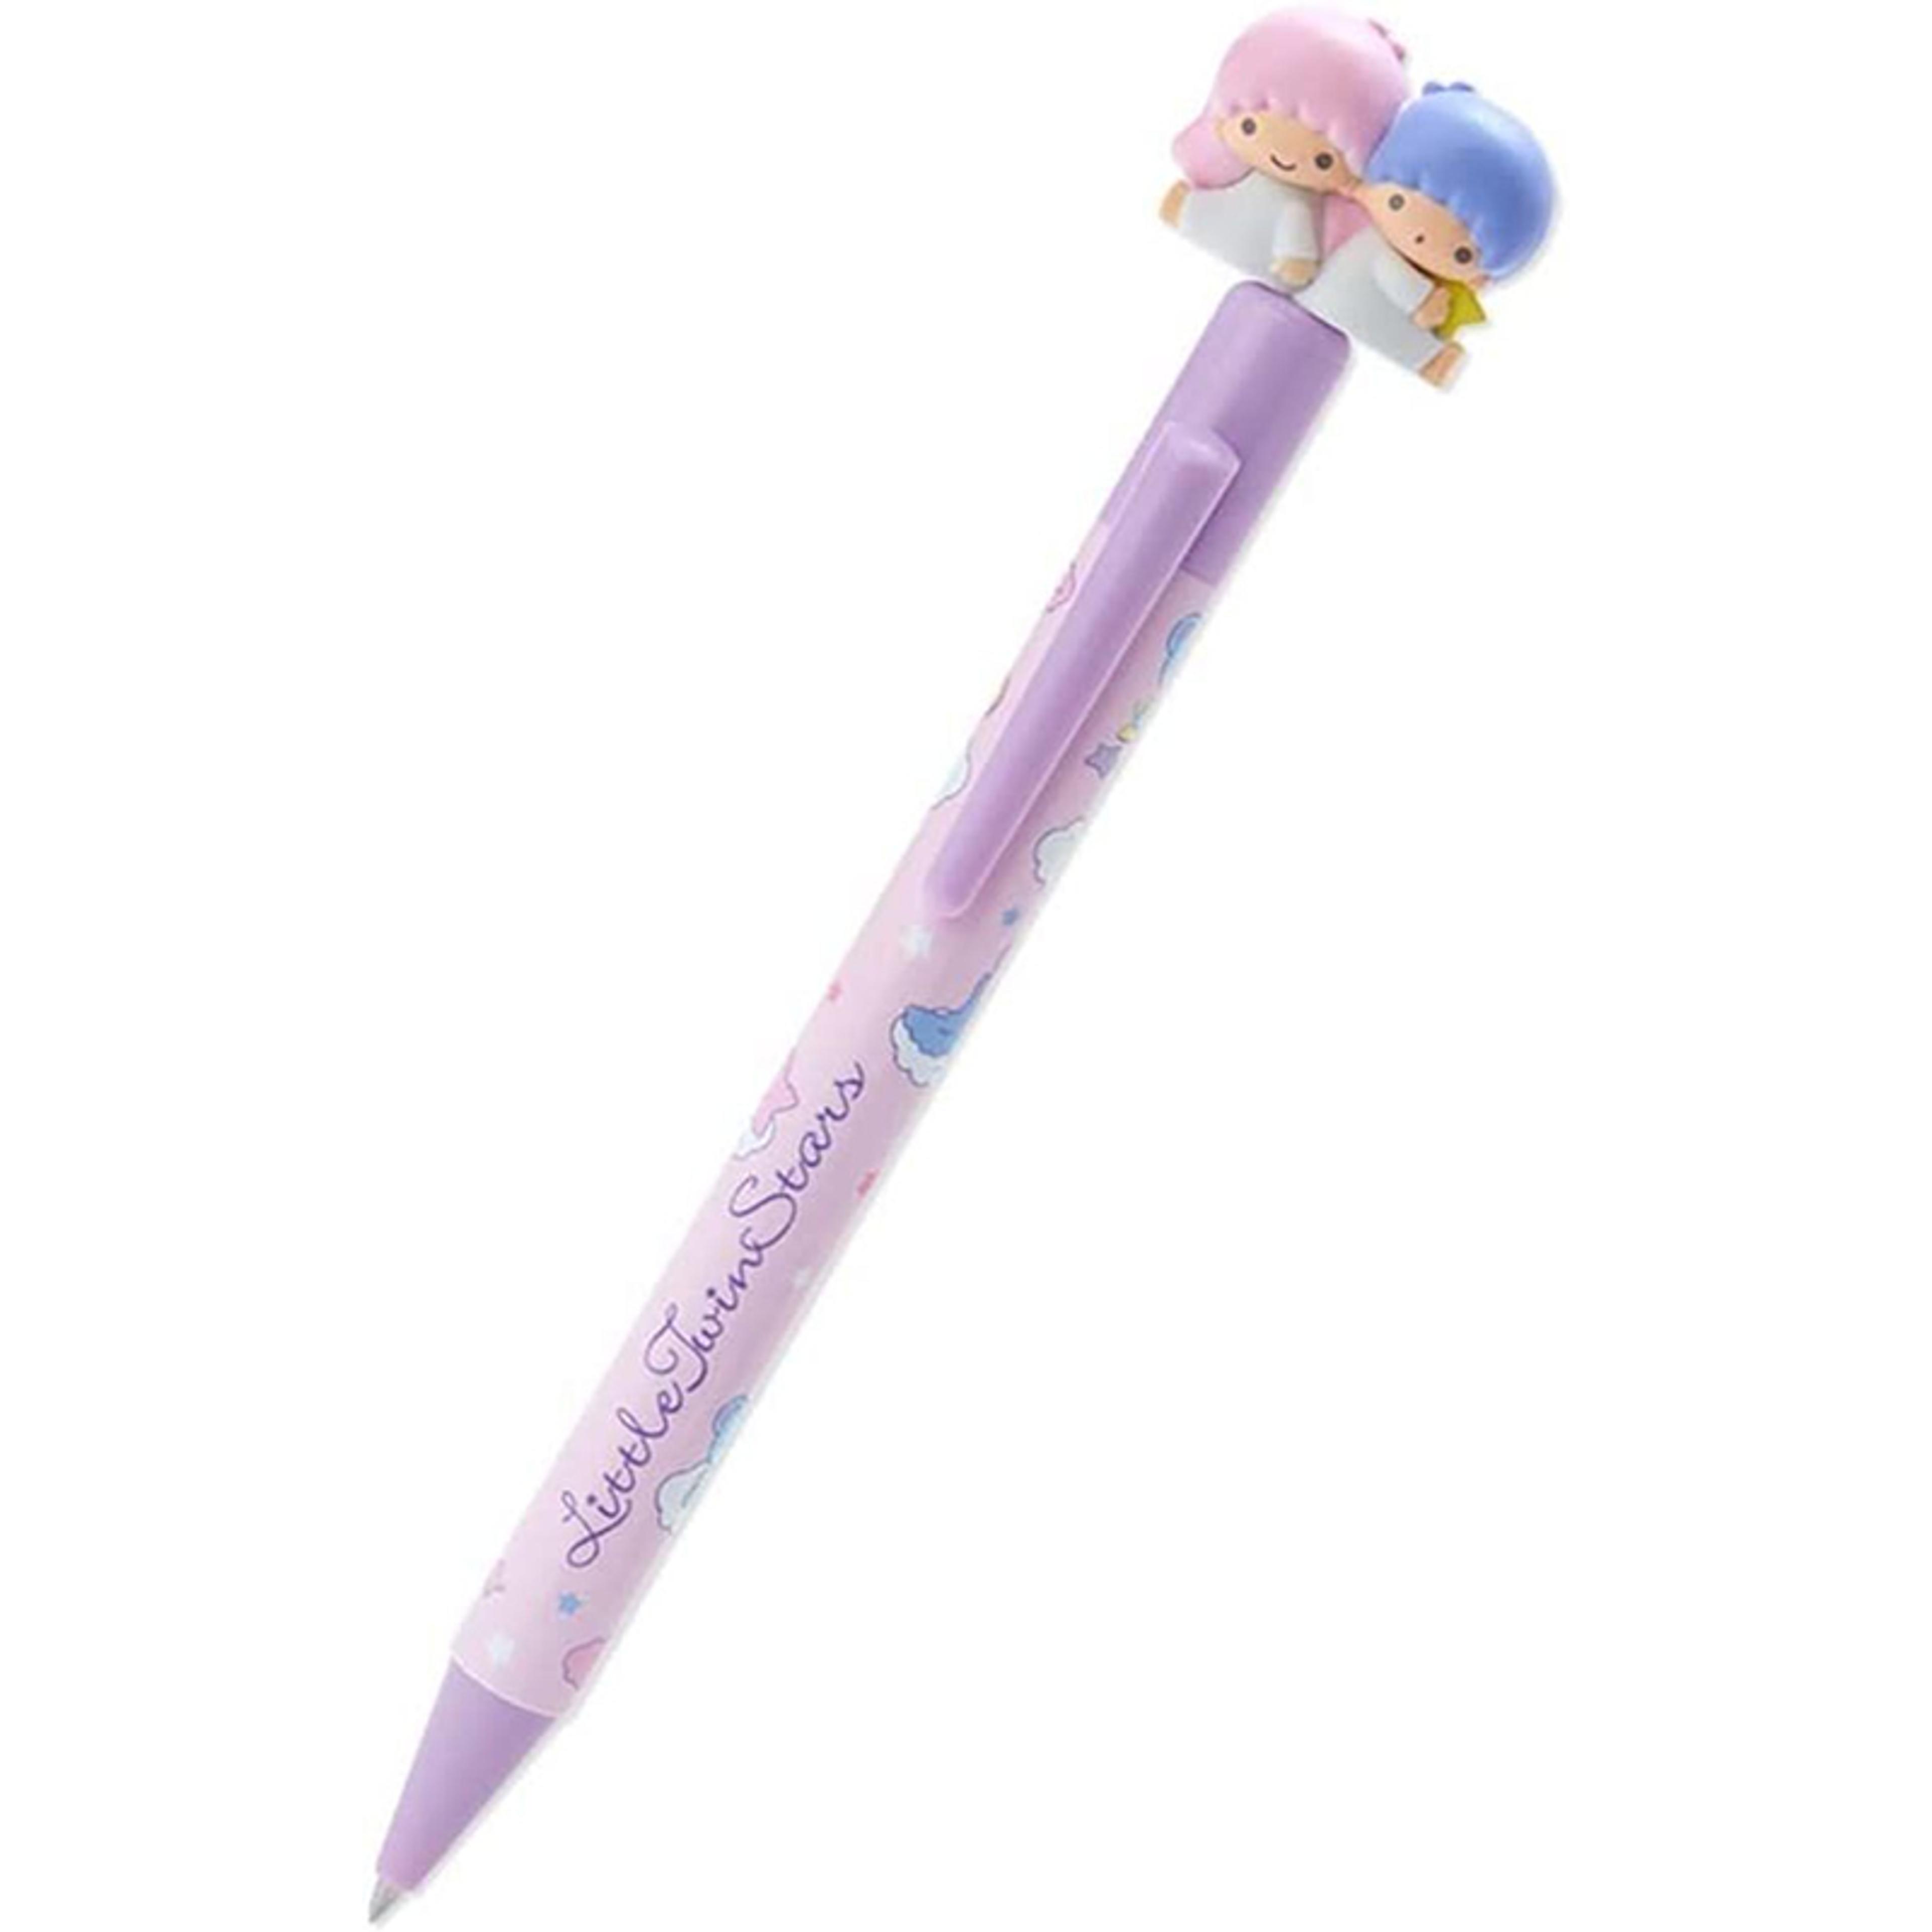 Alternate View 3 of Sanrio Mascot Ballpoint Pen